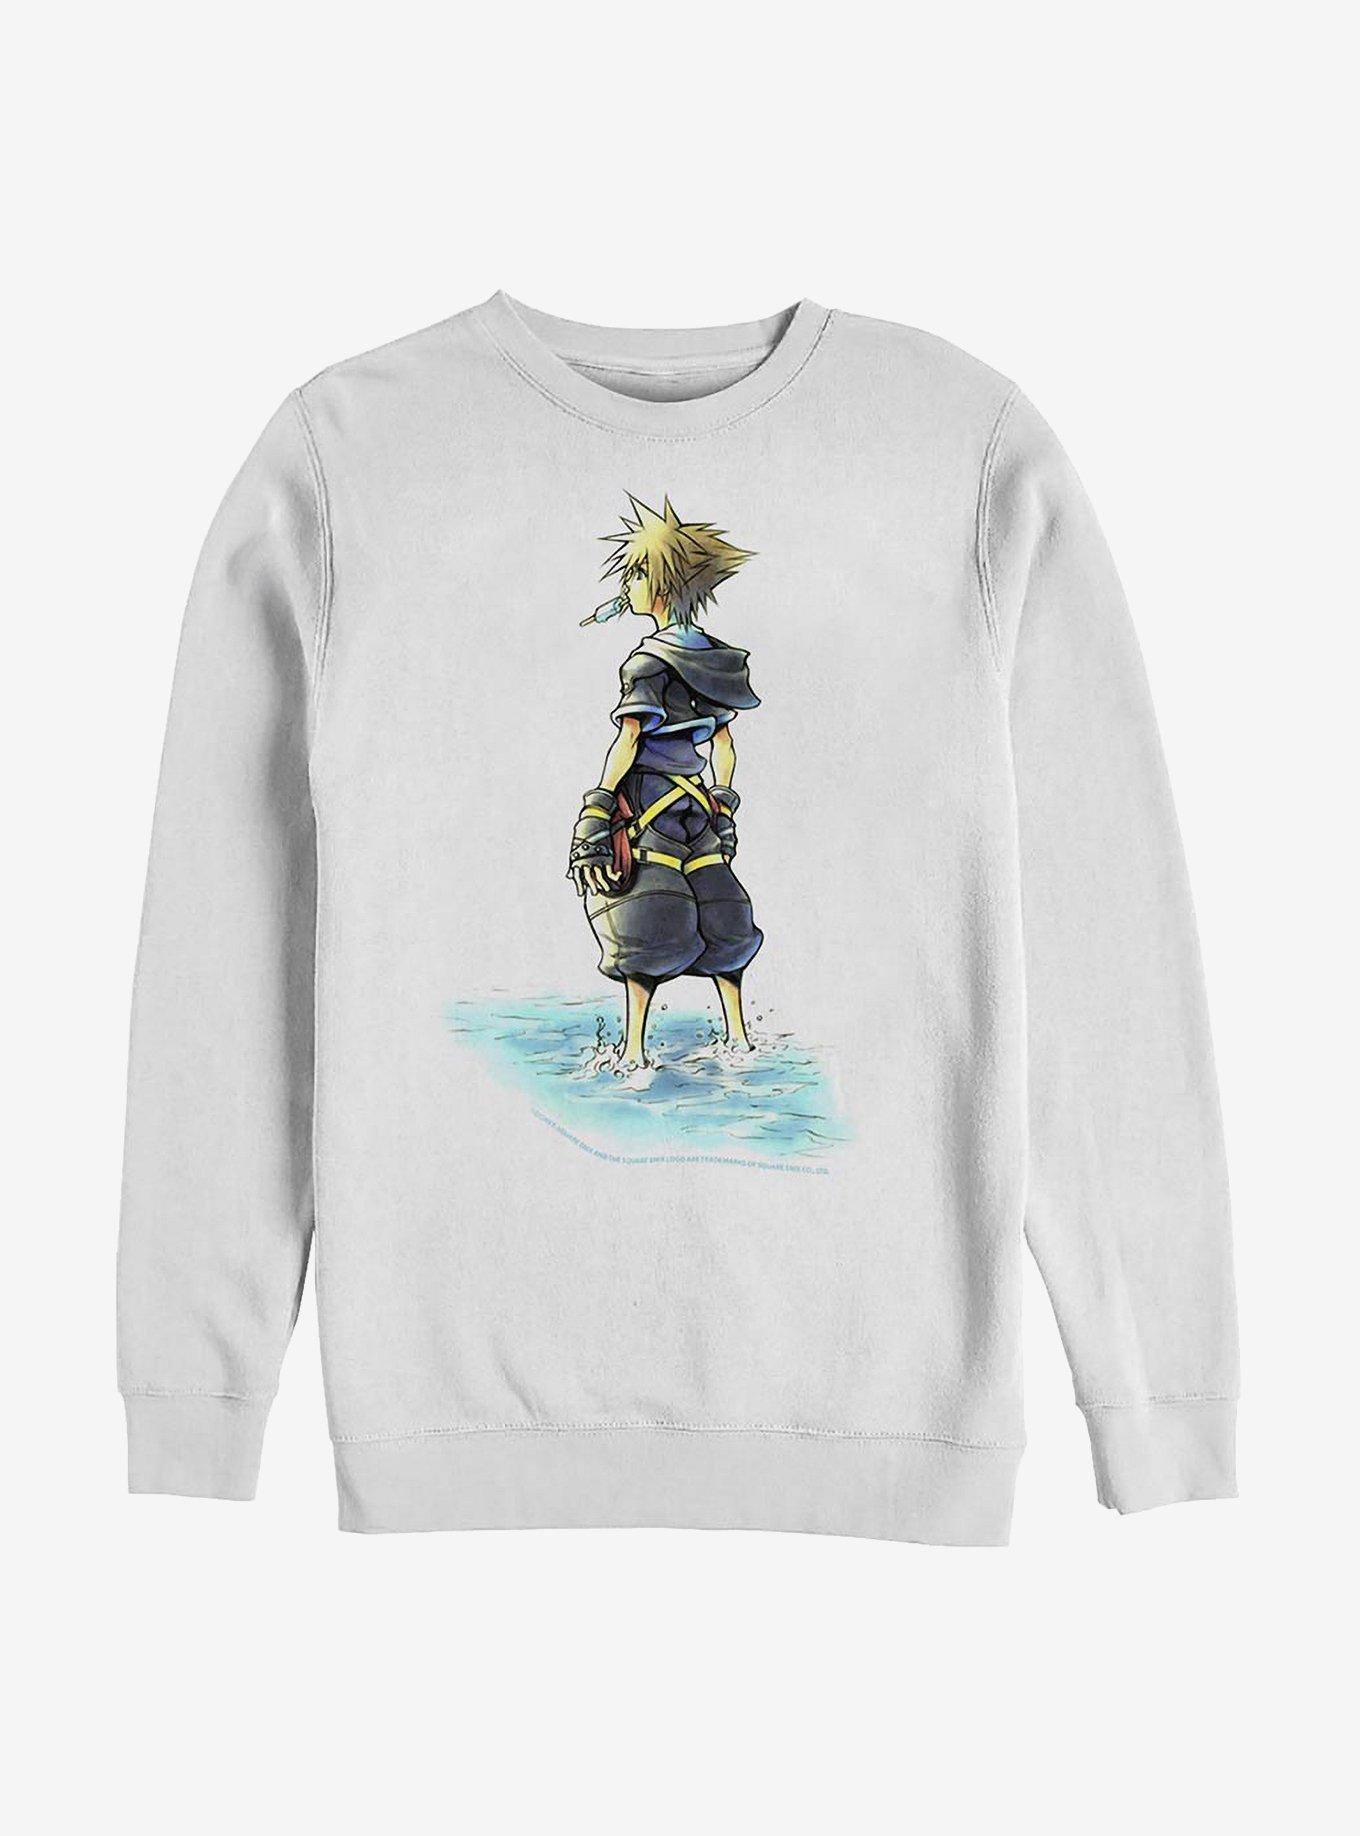 Disney Kingdom Hearts Feet Wet Sweatshirt